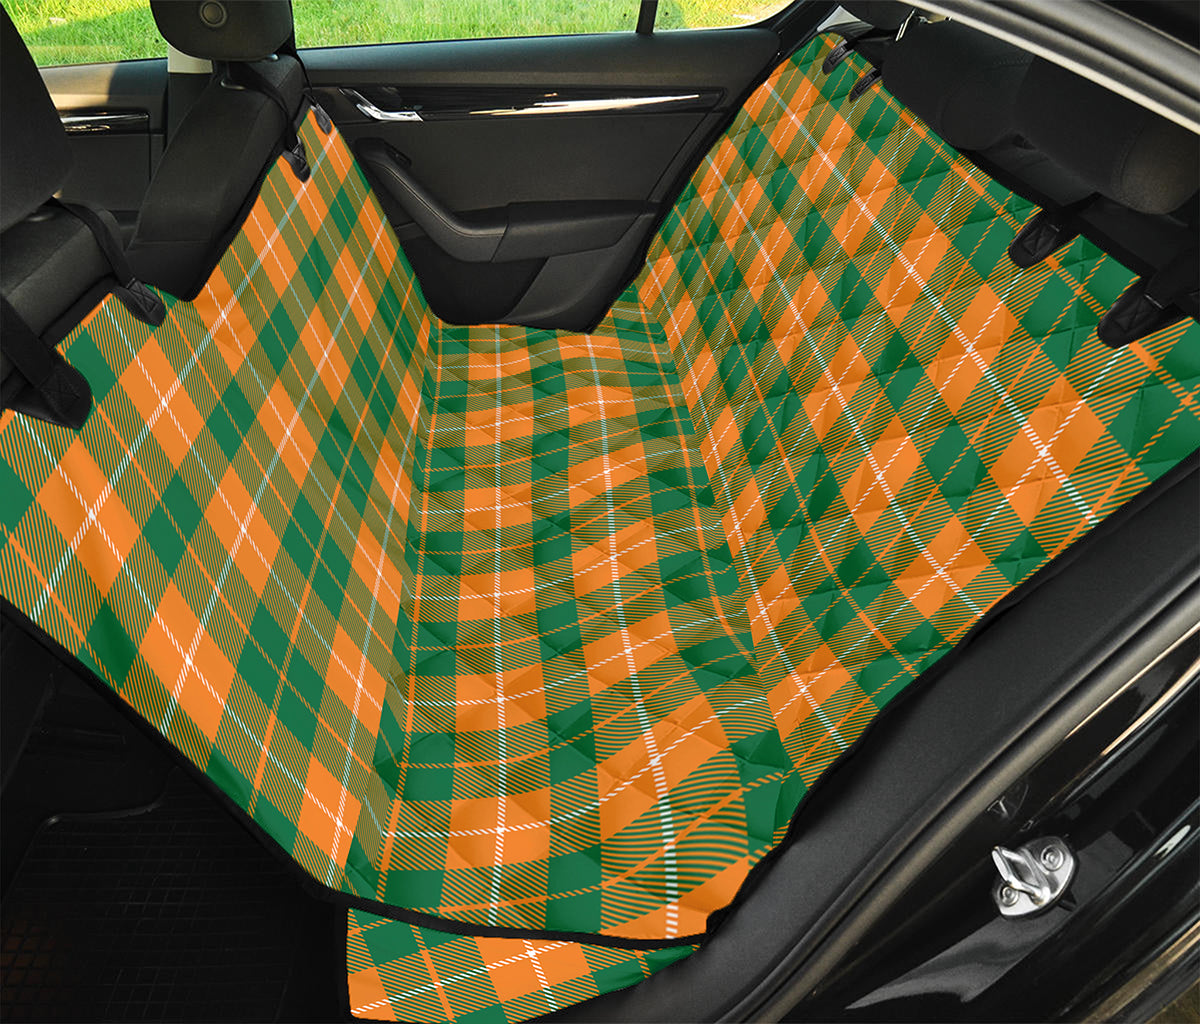 Irish Themed Plaid Pattern Print Pet Car Back Seat Cover